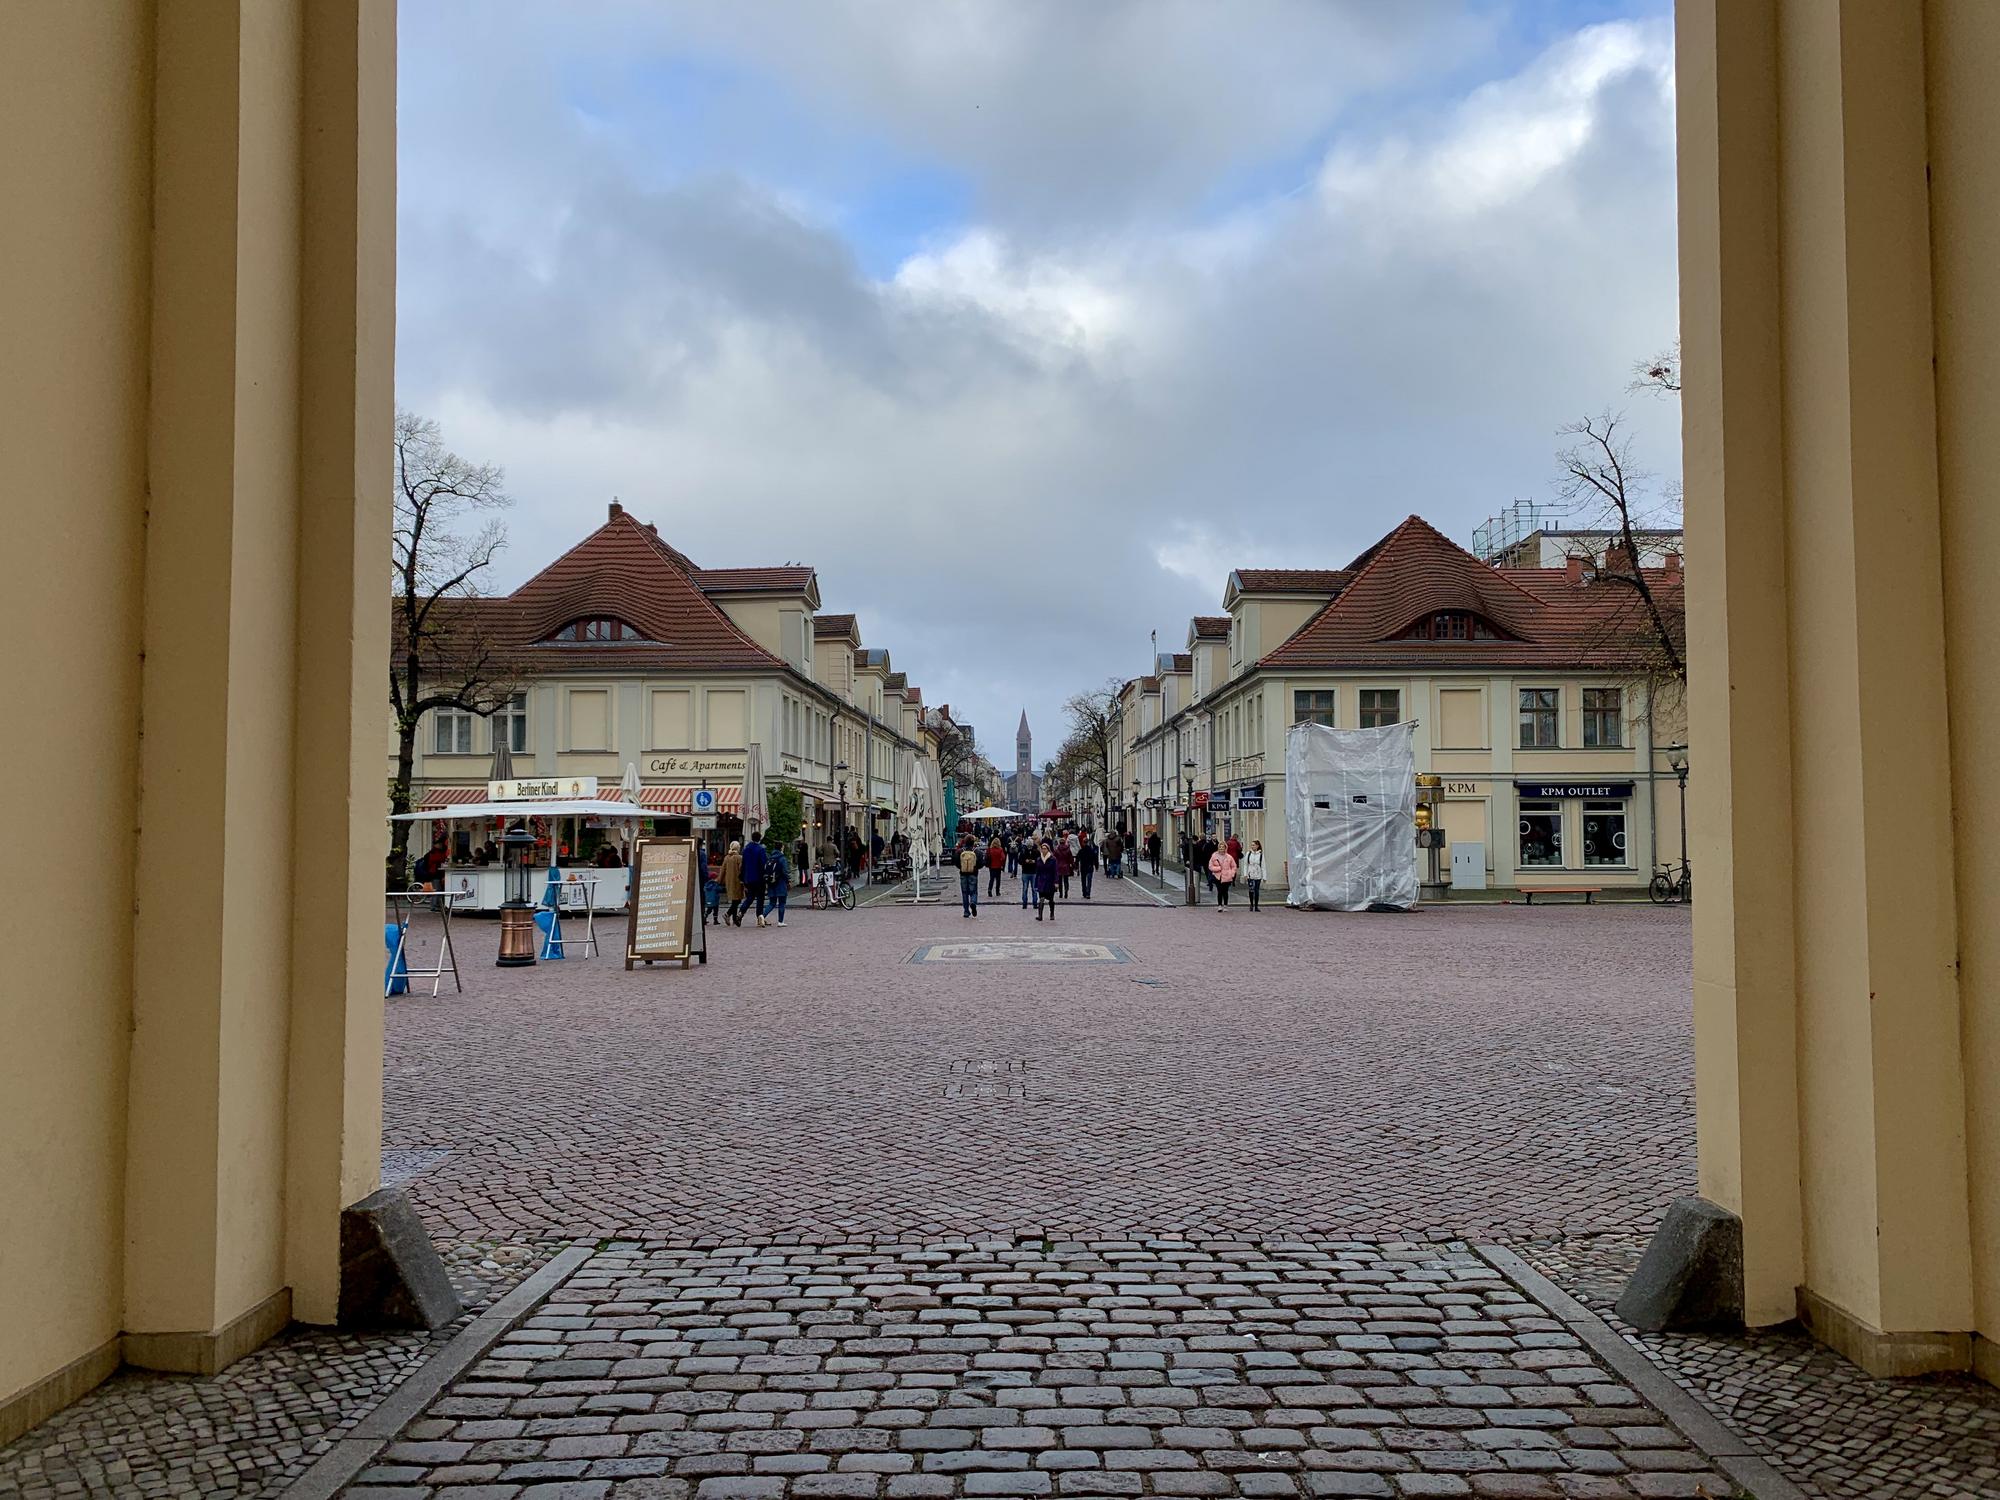 🇩🇪 Potsdam, Germany, November 2019.